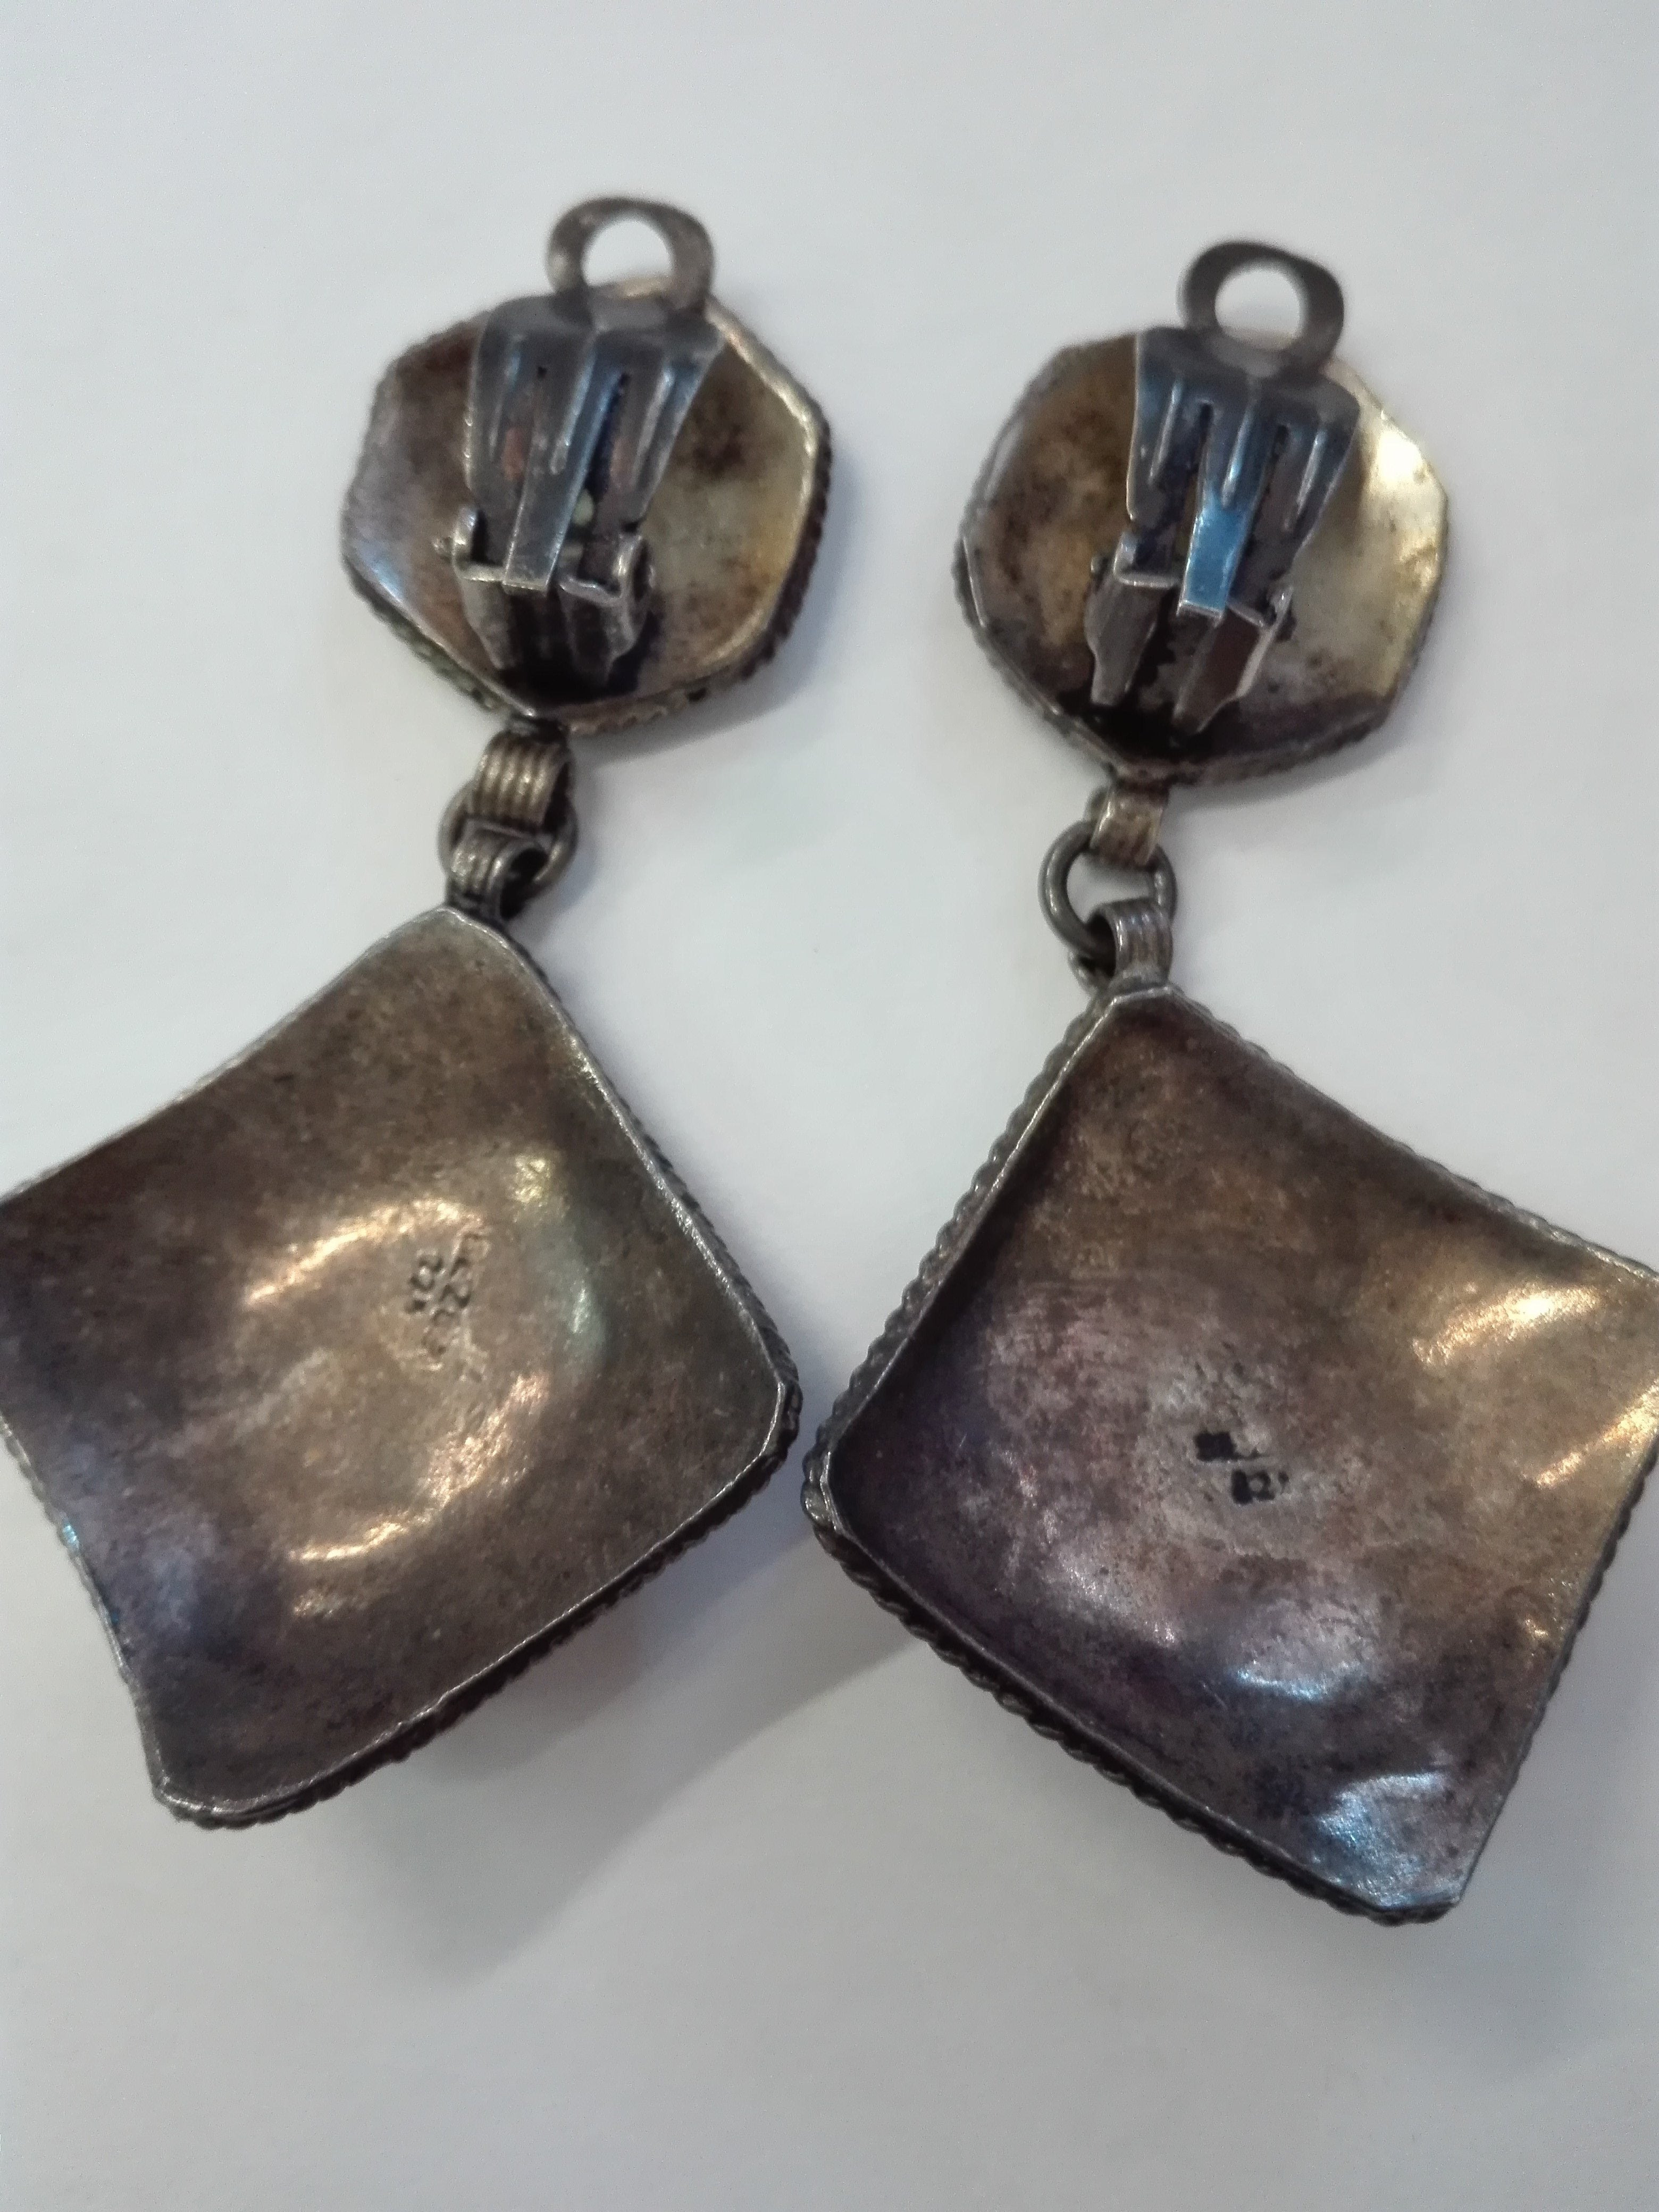 Vintage Silver Earrings Designed by Sezbin With Malachit Stone